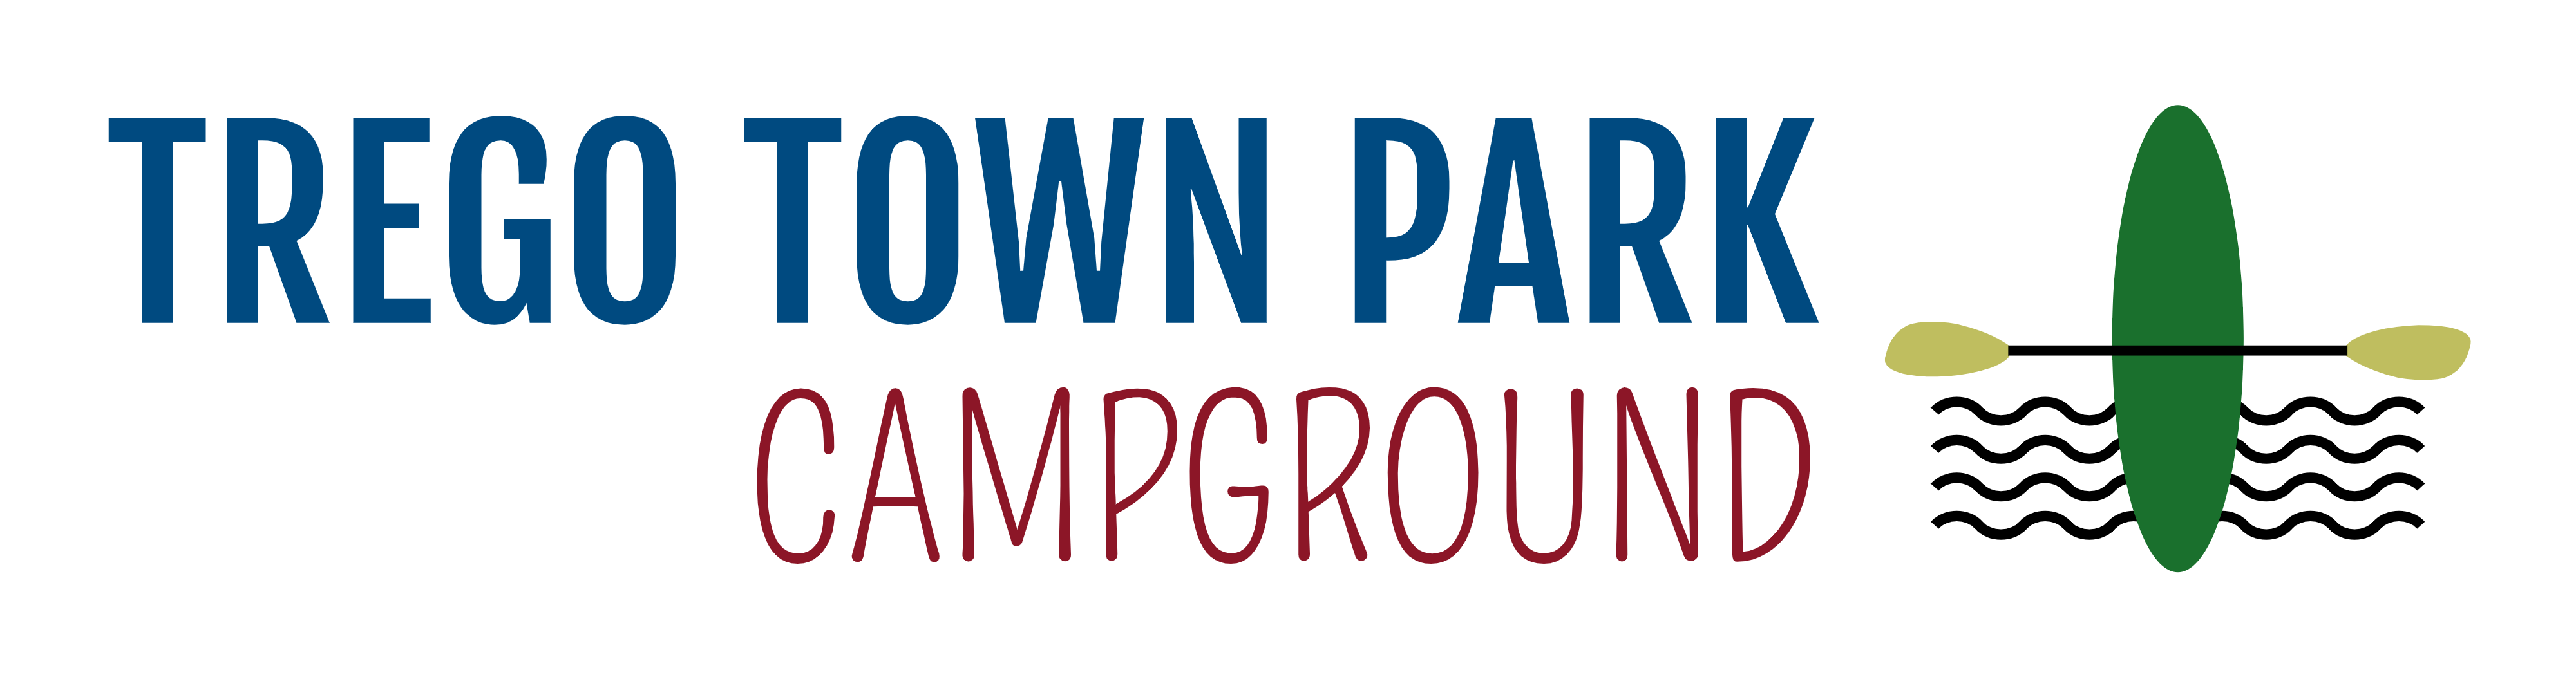 Trego Town Park Campground logo